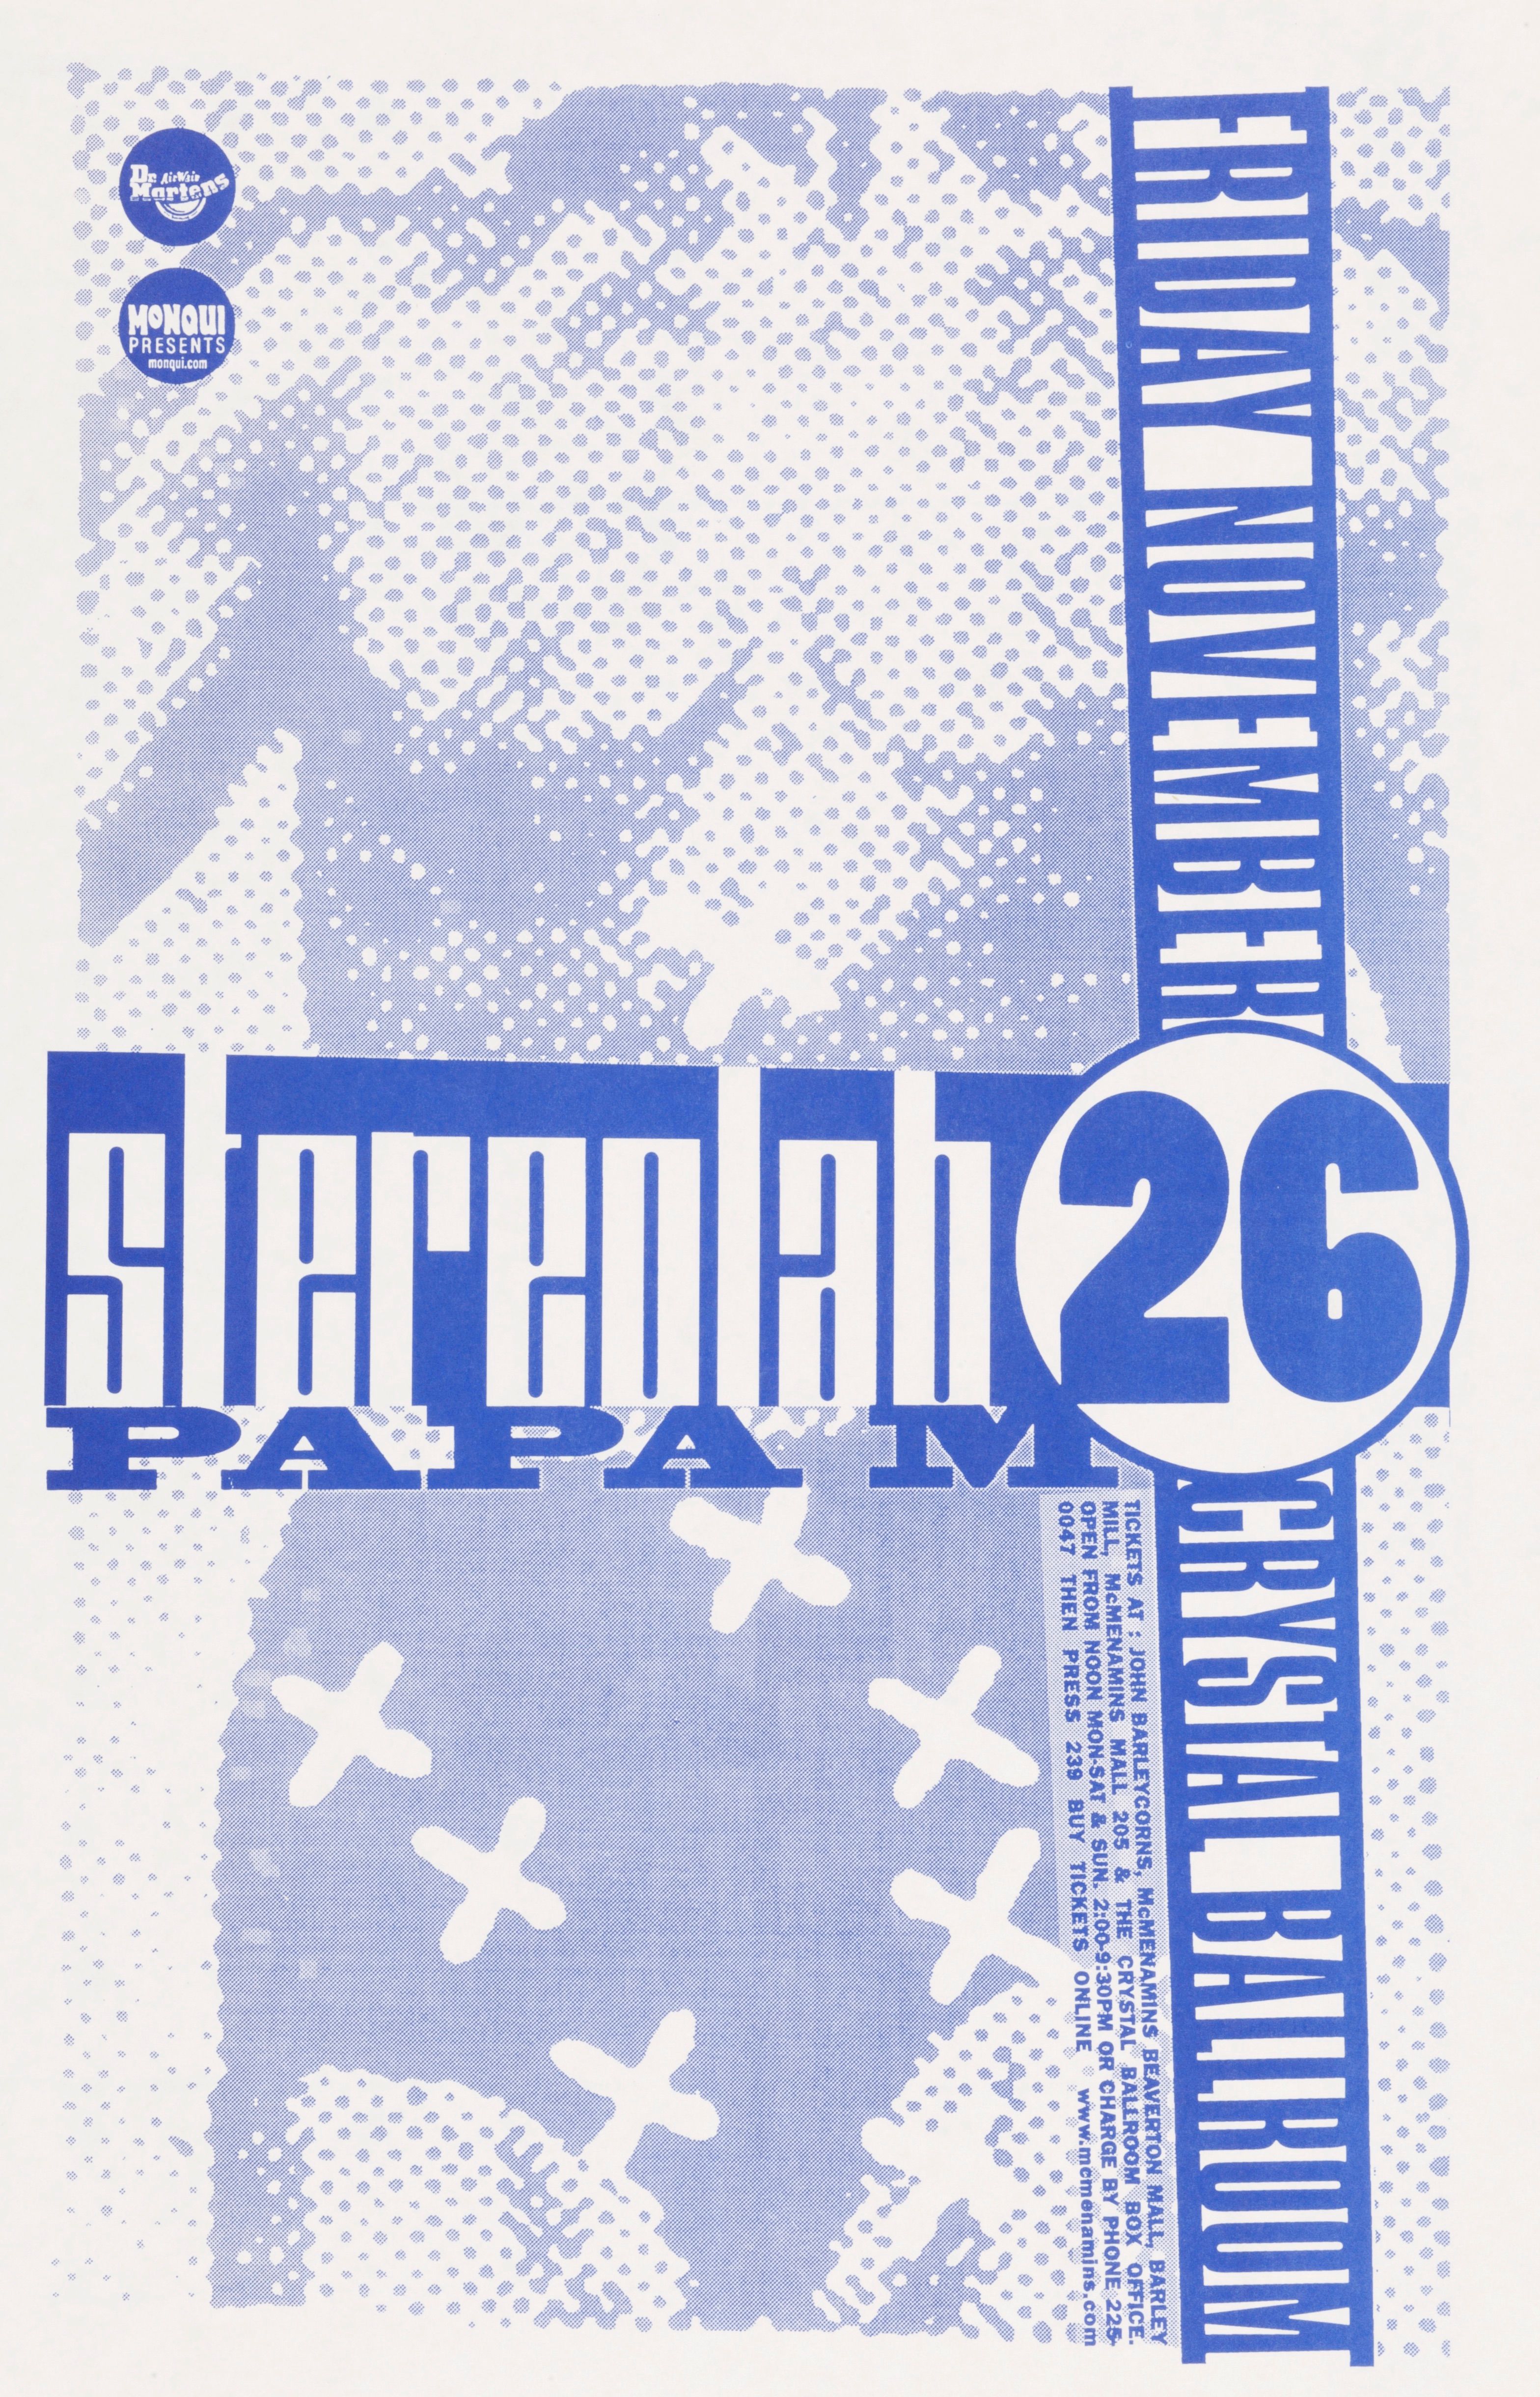 MXP-32.3 Stereolab Crystal Ballroom 1999 Concert Poster